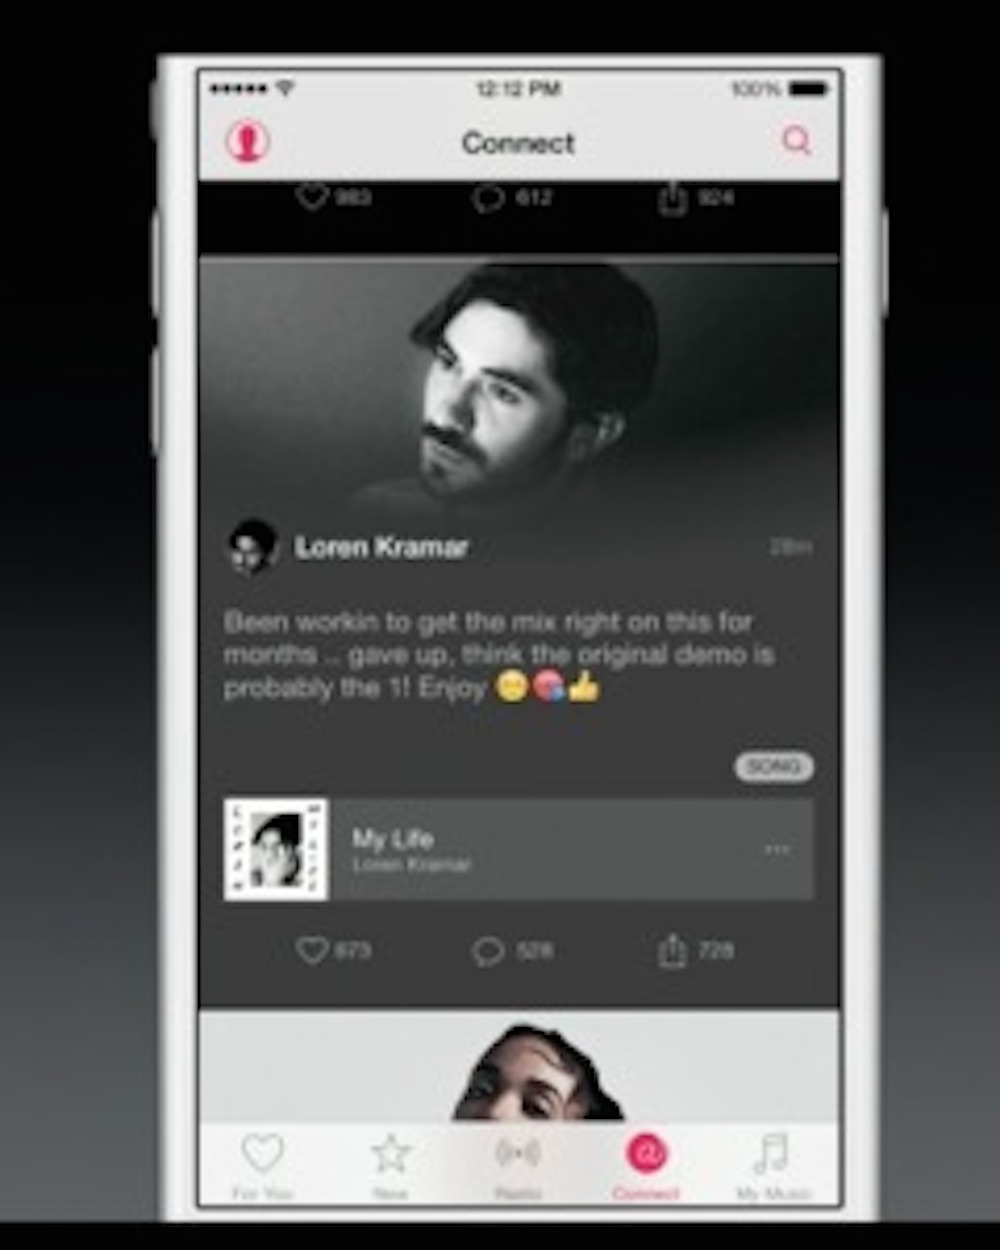 Cómo conseguir tu perfil de artista de Apple Music mediante Apple Connect